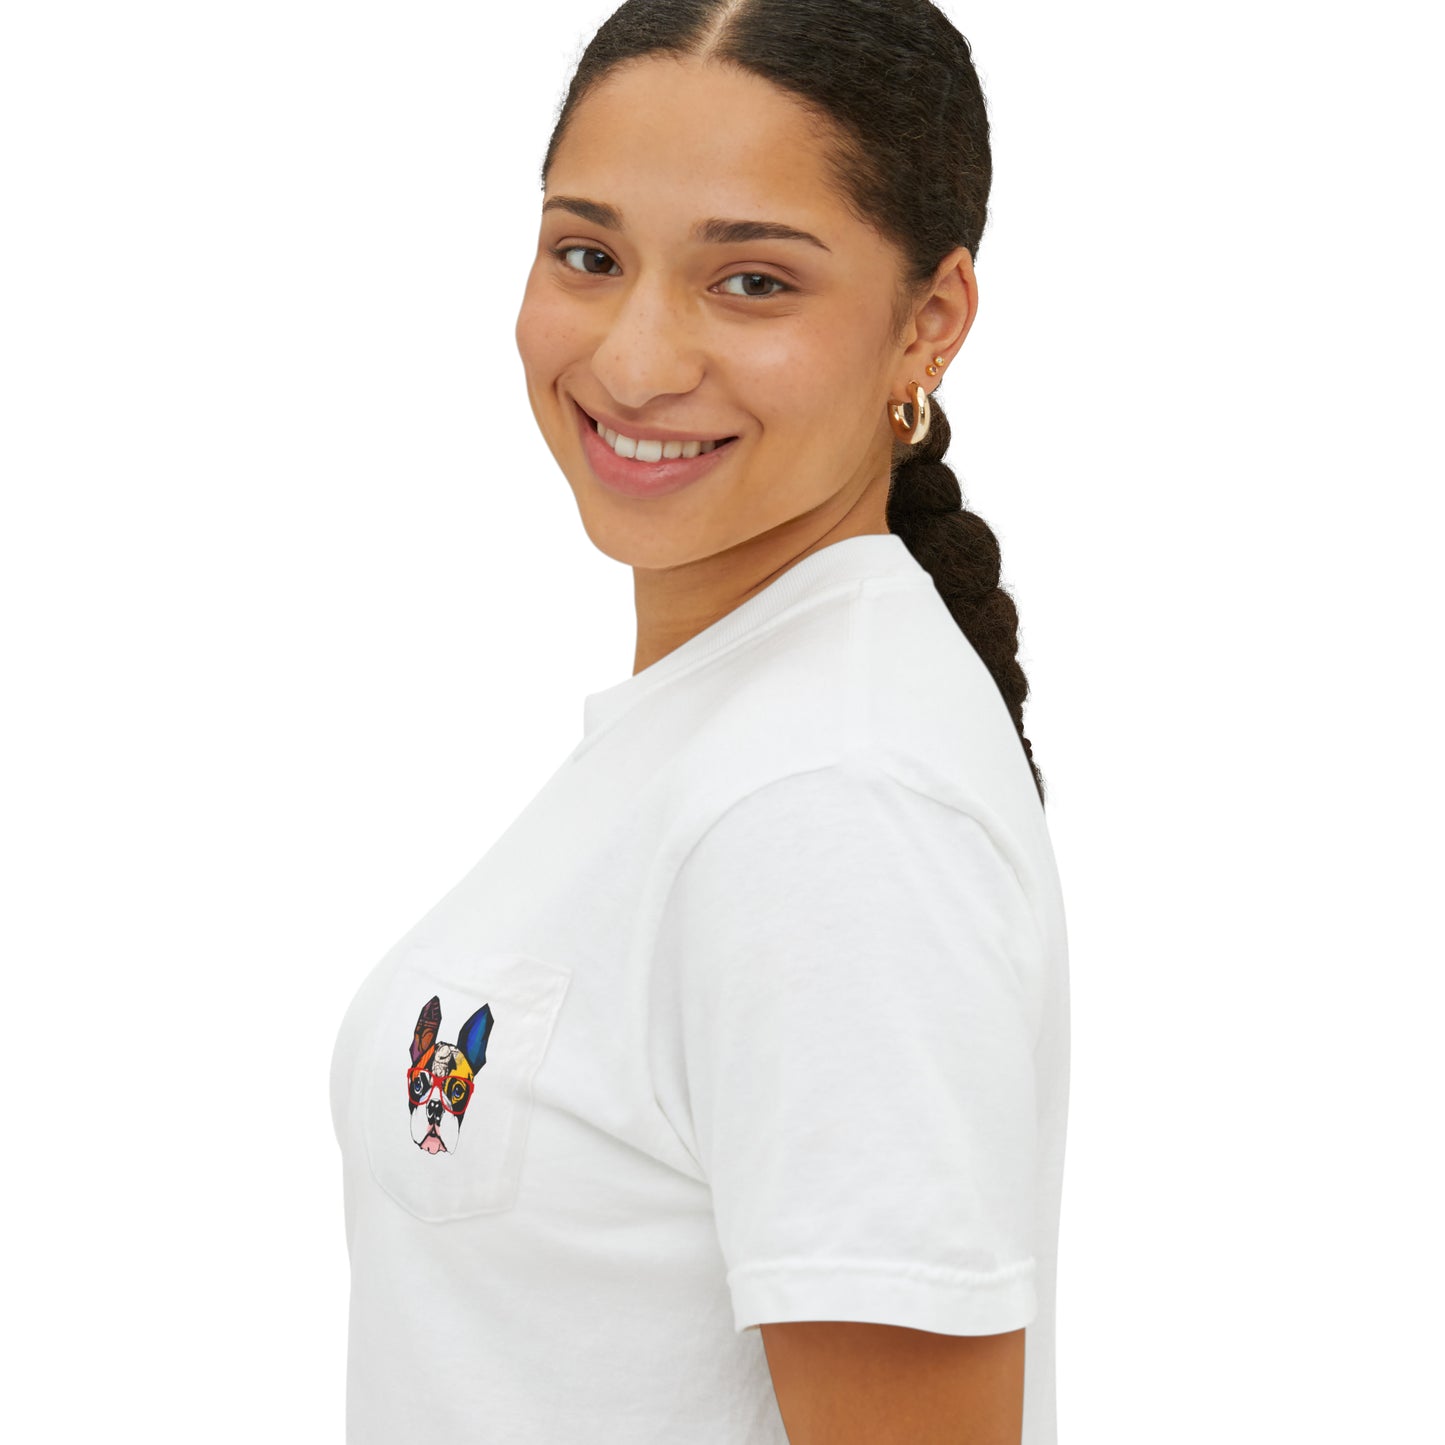 Unisex Garment-Dyed Pocket T-Shirt